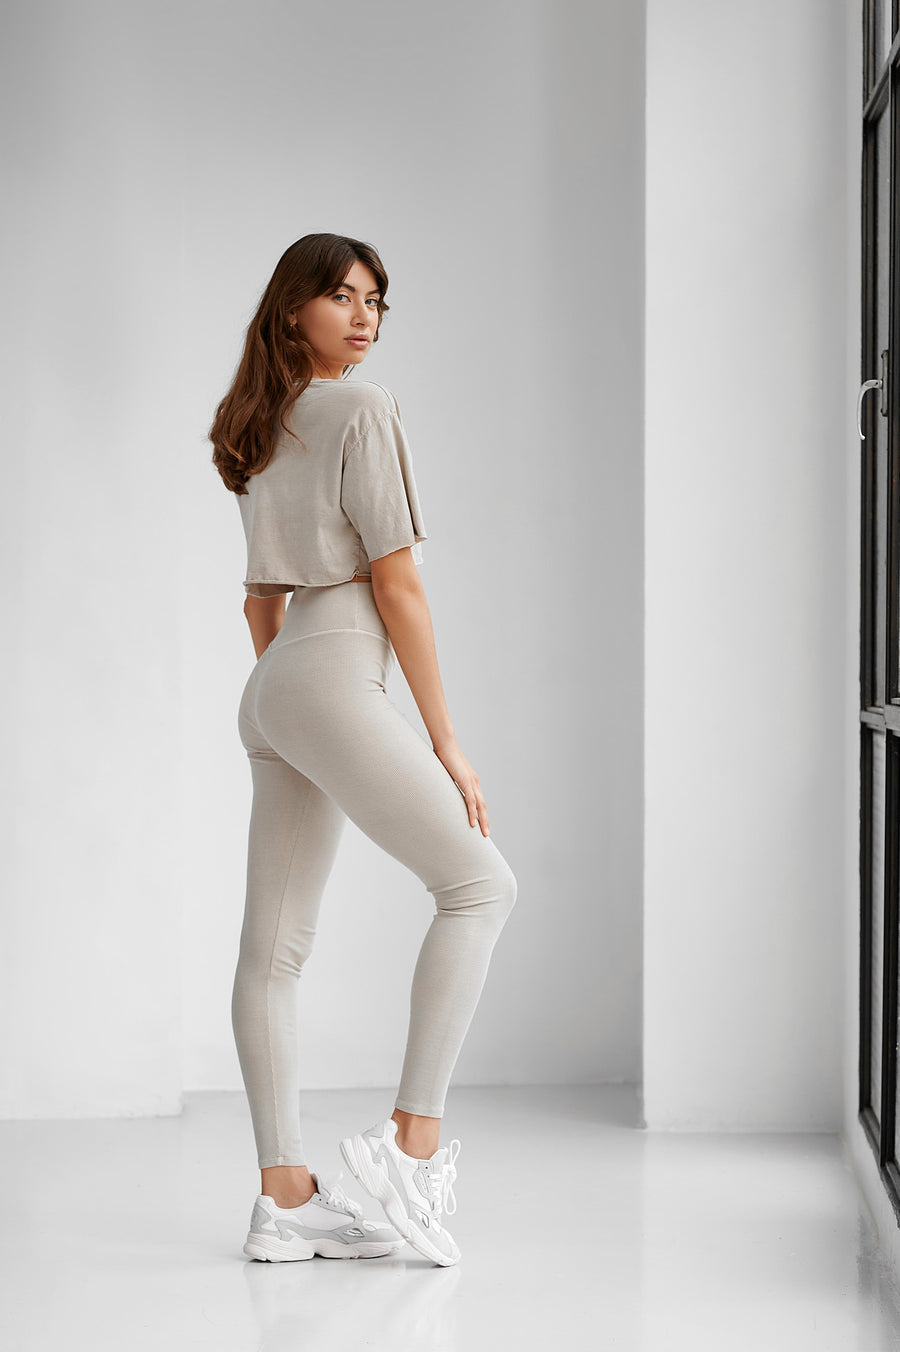 Eunoia Leggings - Light Beige - Tight Fit - Ribbed Fabric -95% Organic Premium Cotton + 5% Elastan - Streetwear - Streetstyle - Minimal Essentials - High Quality Basics - Back Image - Minimal Aesthetic - Becca & Cole